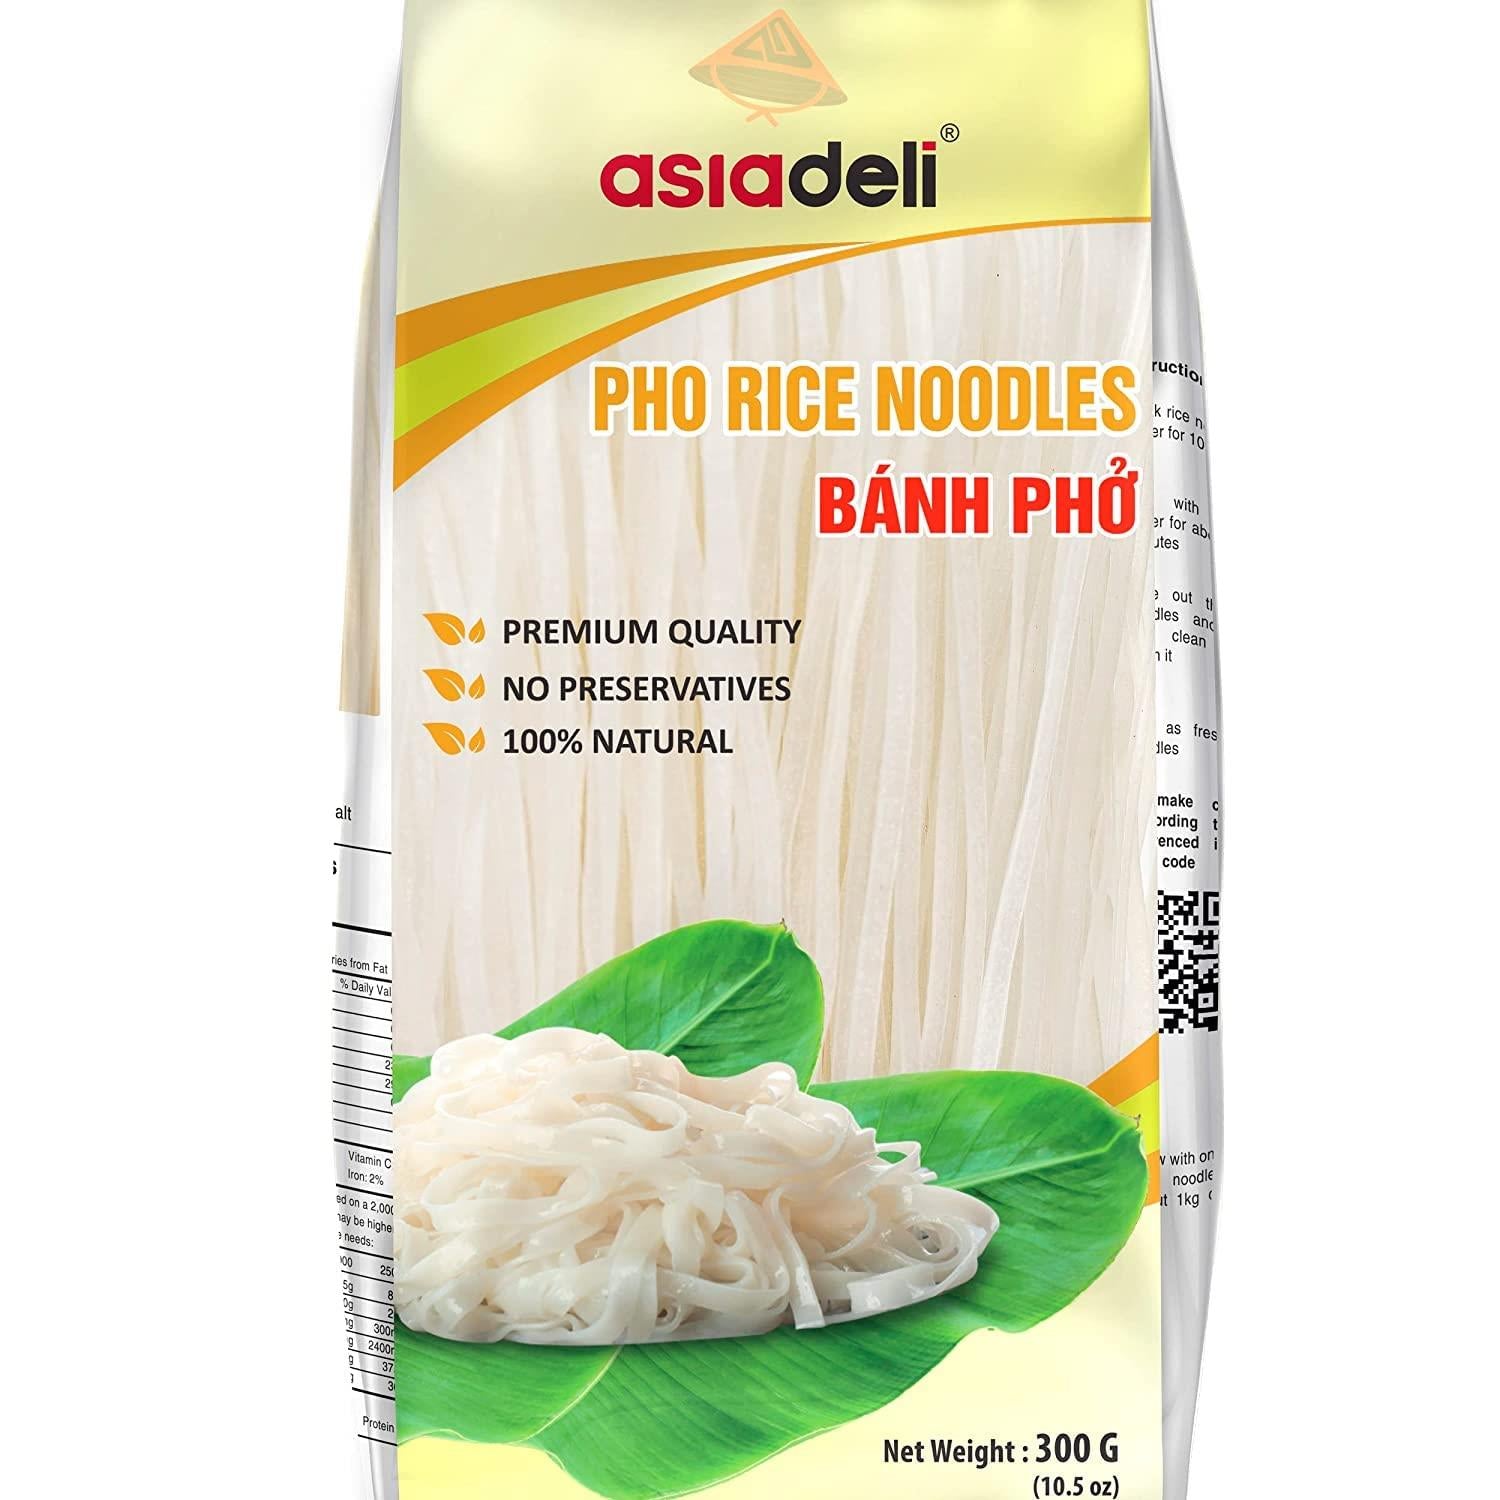 Asiadeli Pho Rice Noodles, Premium Rice Stick Noodles, Banh Pho Noodles - 10.5 oz. (Pack of 6 Bags)